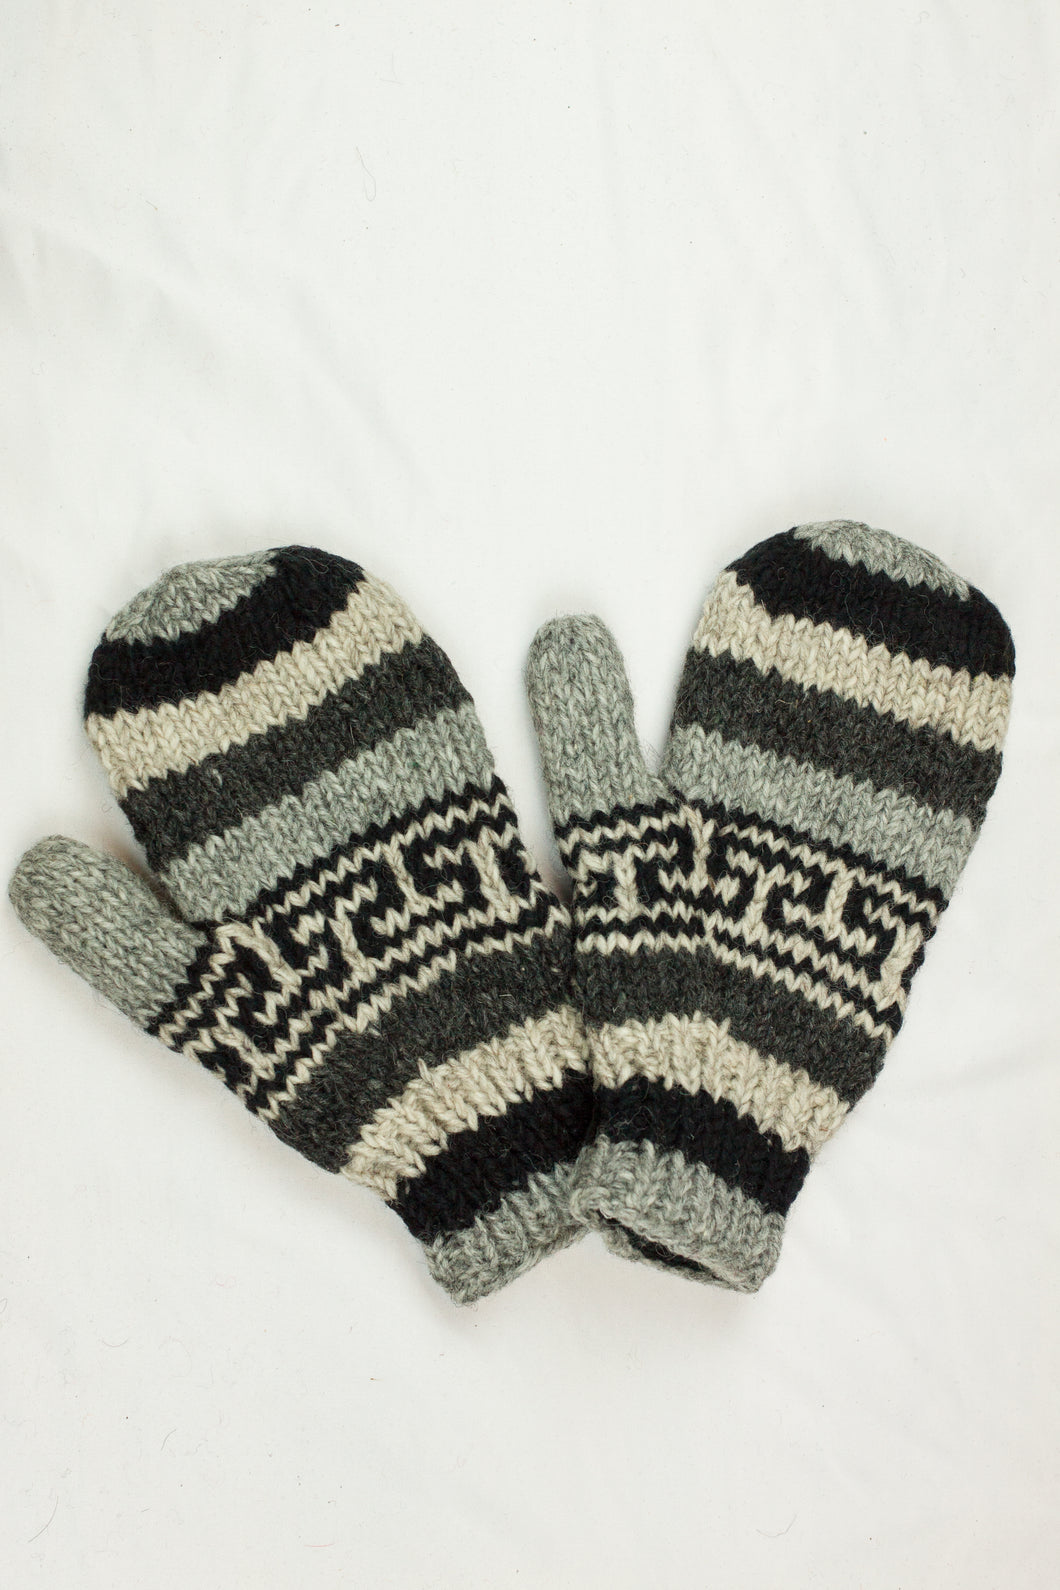 Hand knitted woolen mitten with soft fleece liner - unisex